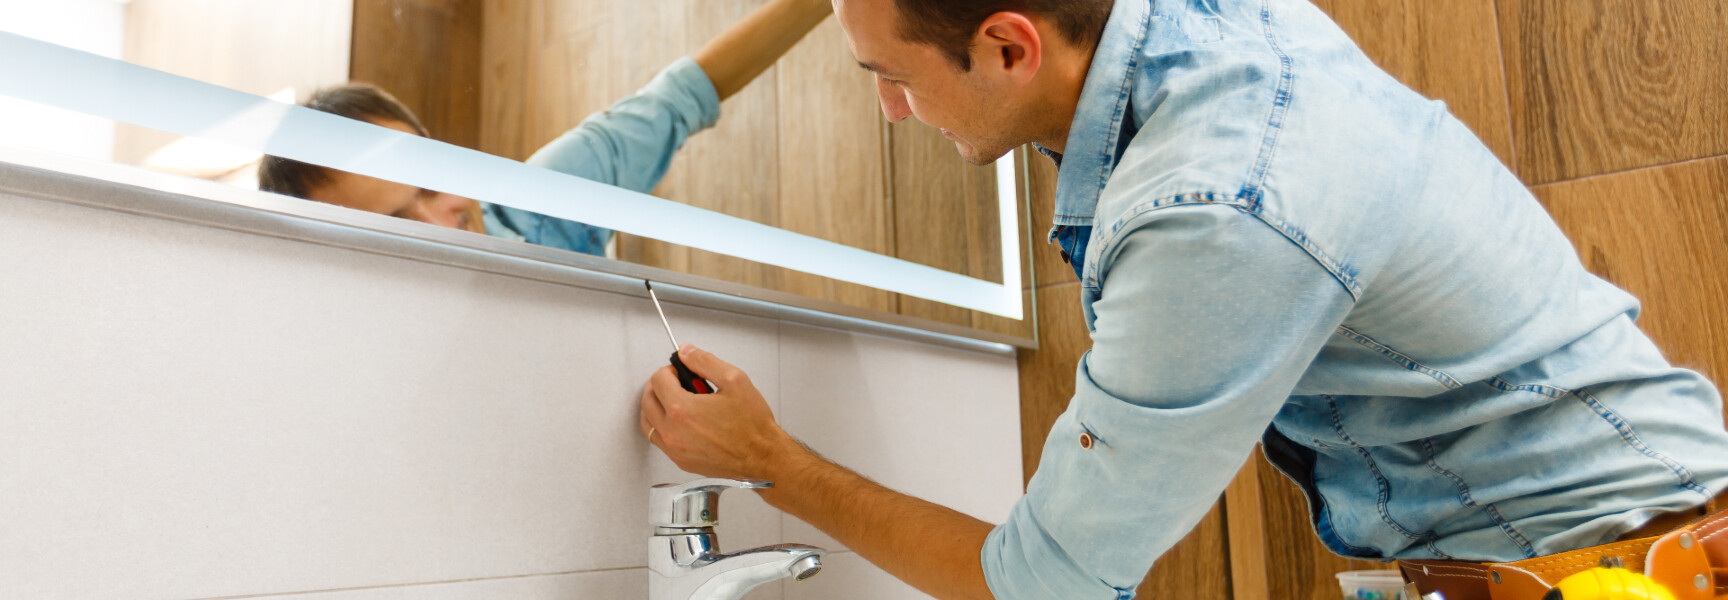 a handyman in a blue denim shirt making repairs on a mirror above the sink.